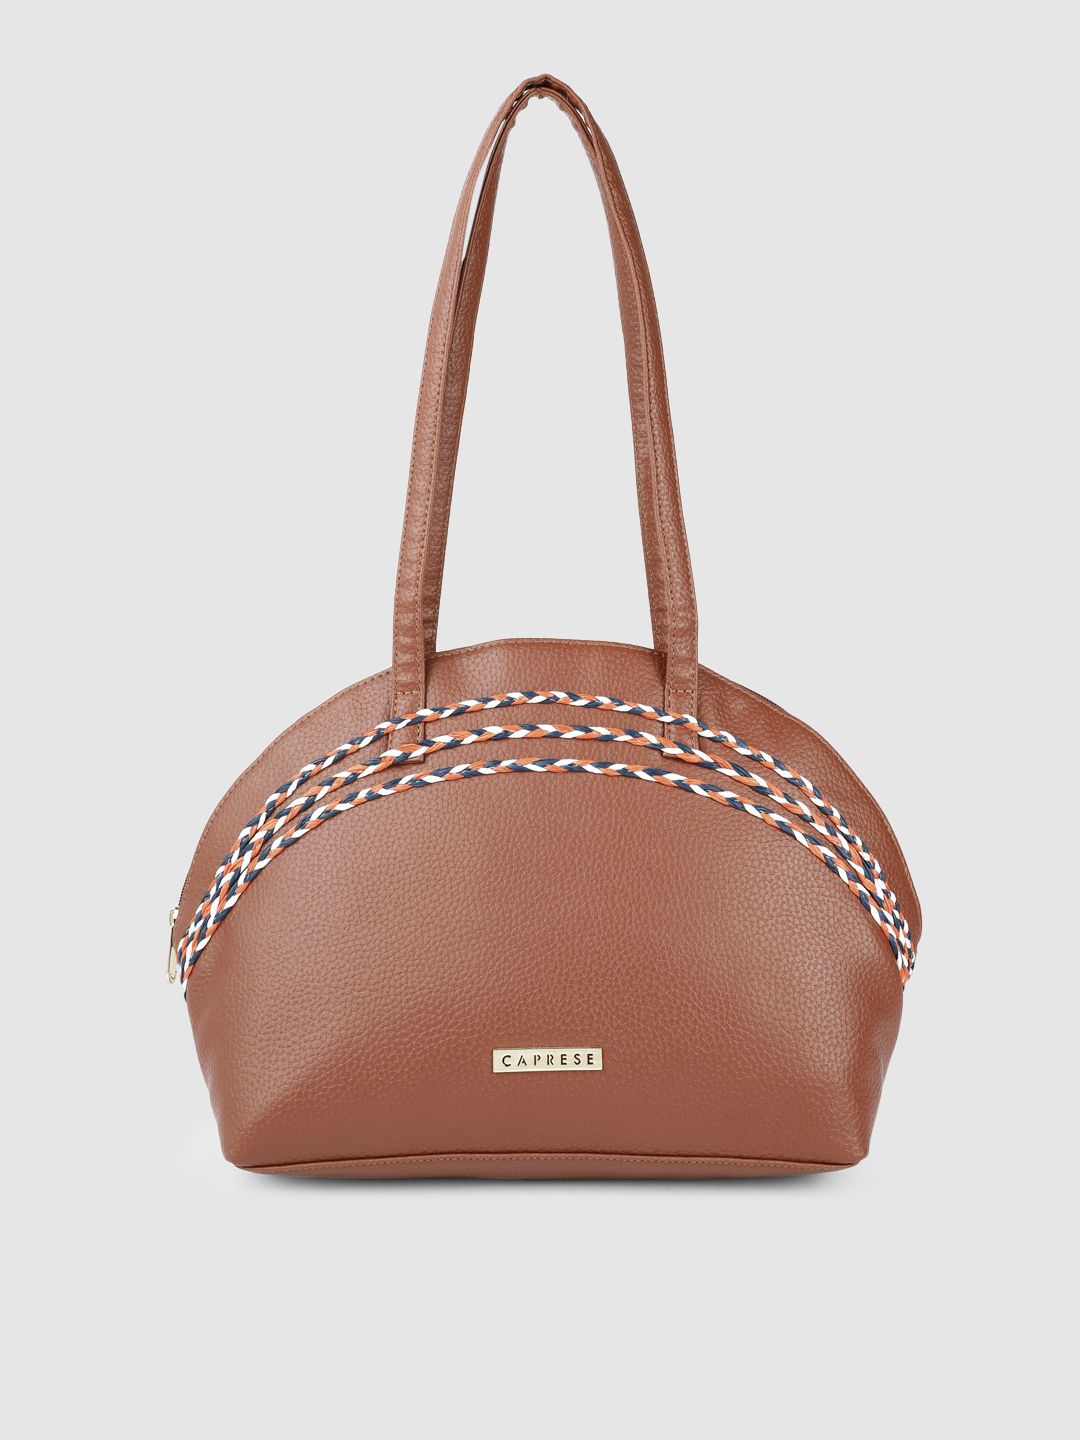 Caprese Brown Textured PU Structured Shoulder Bag Price in India